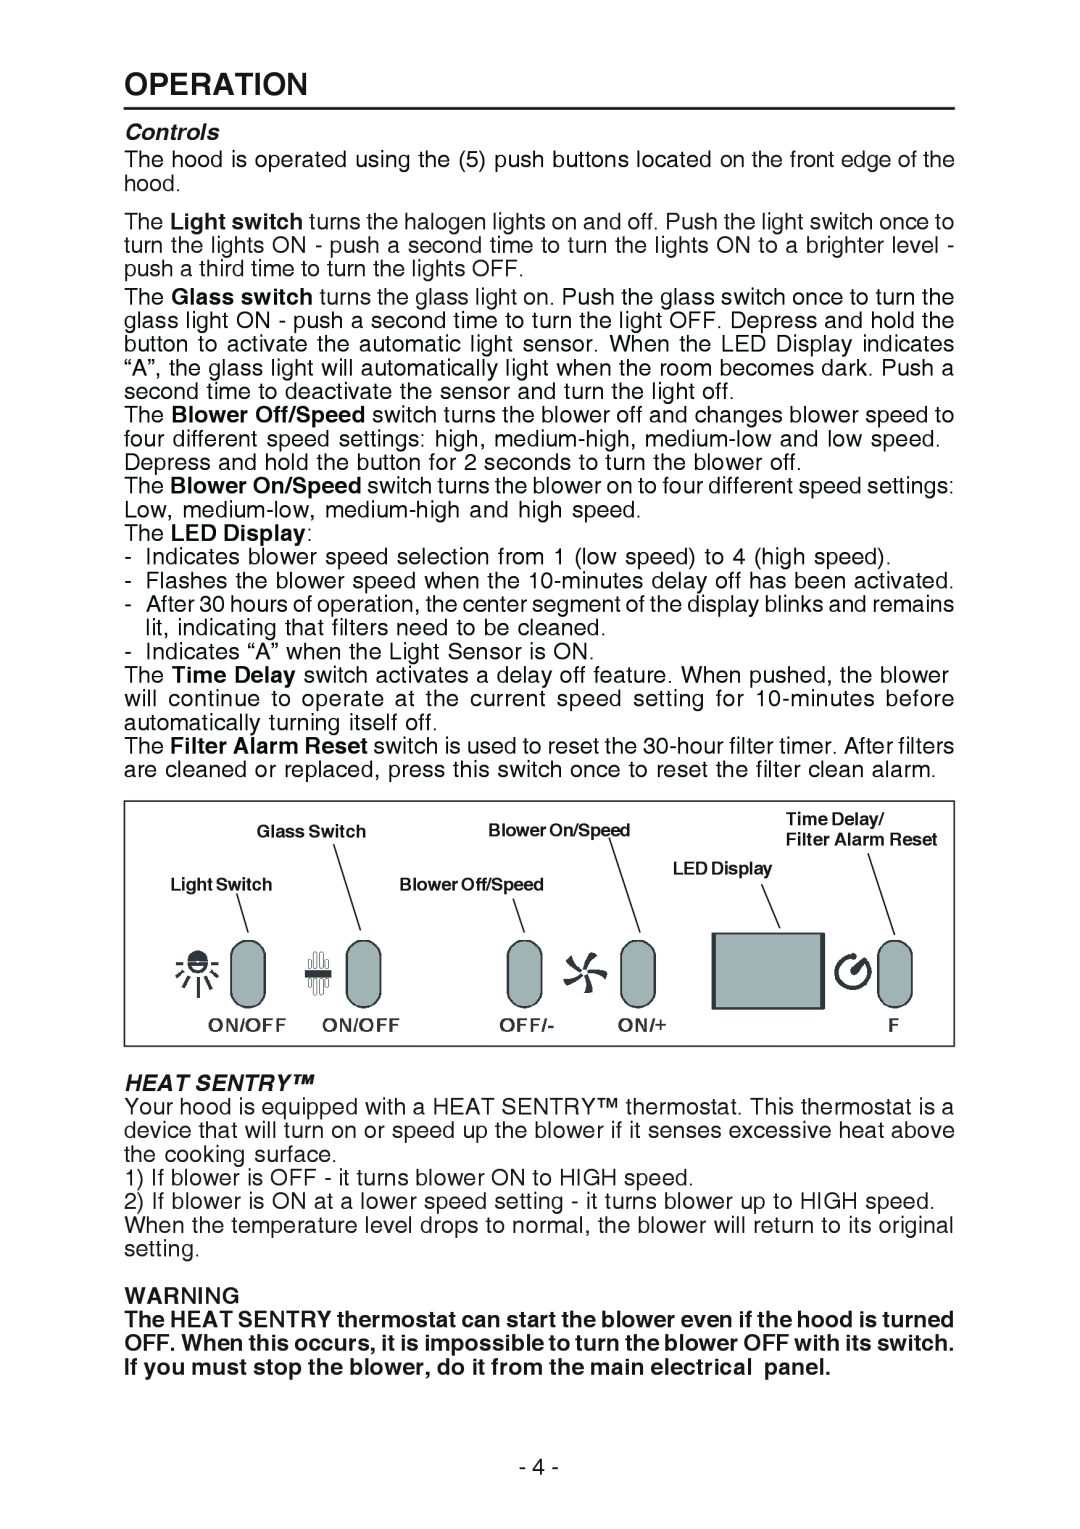 Broan WC26I manual Operation, Controls, The LED Display, Heat Sentry 